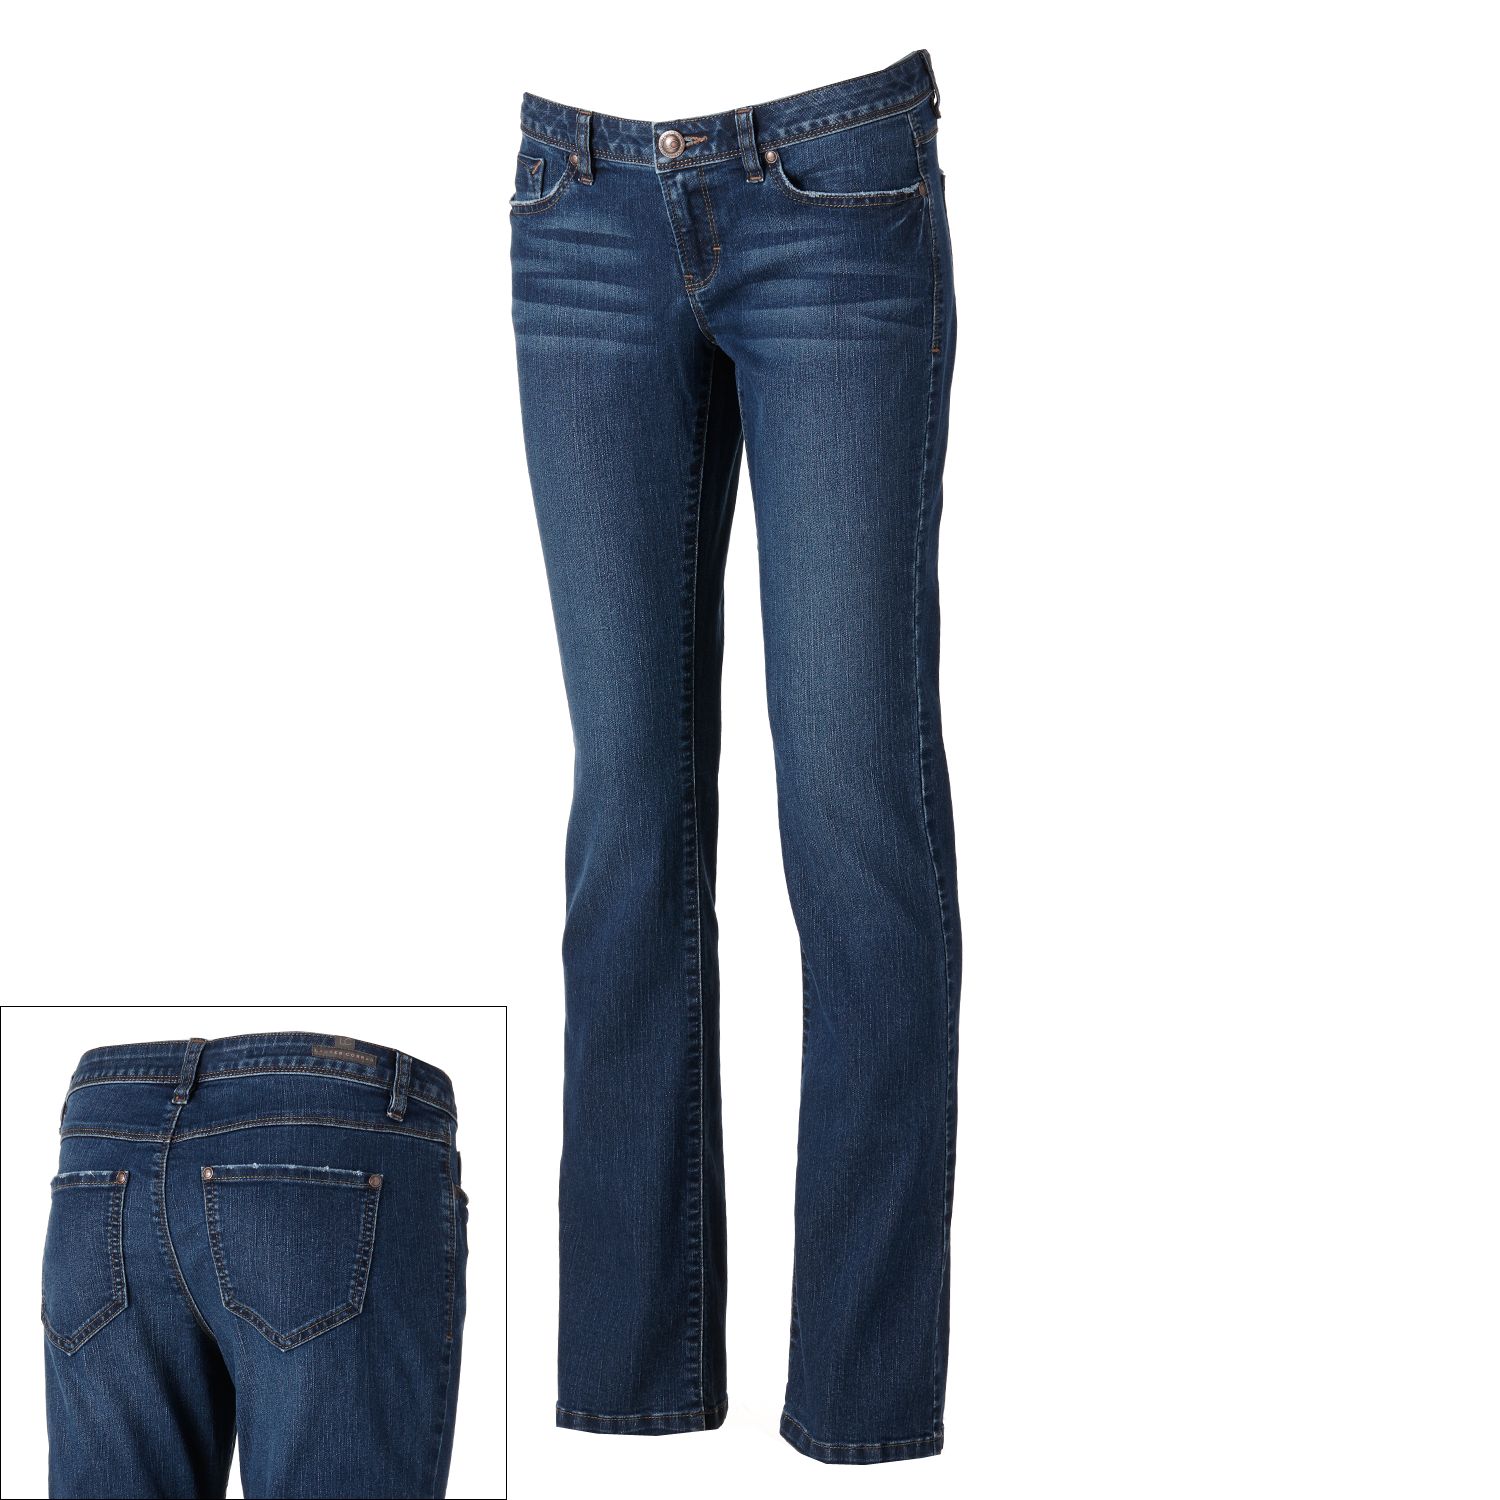 lauren conrad bootcut jeans